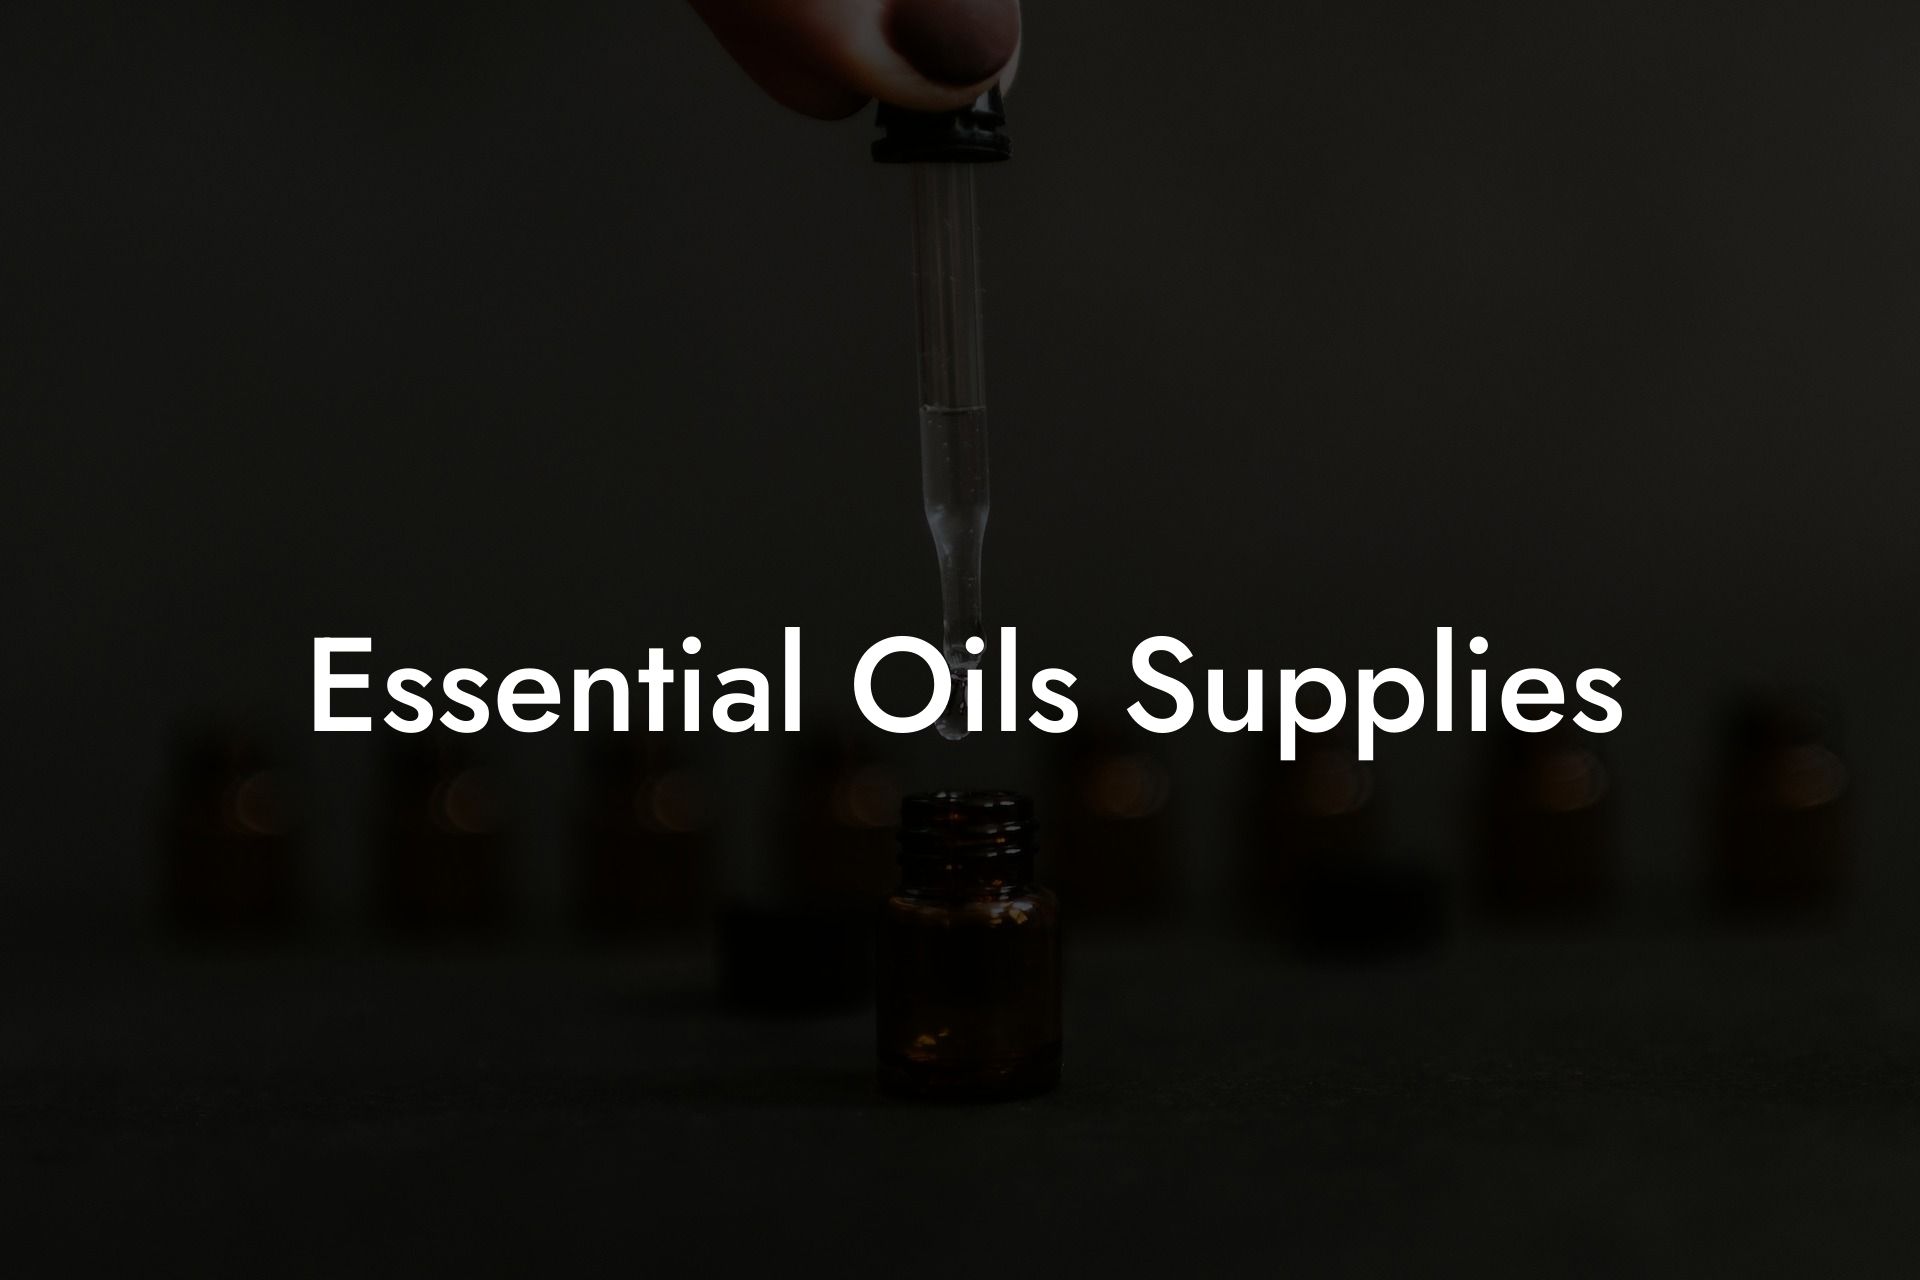 Essential Oils Supplies